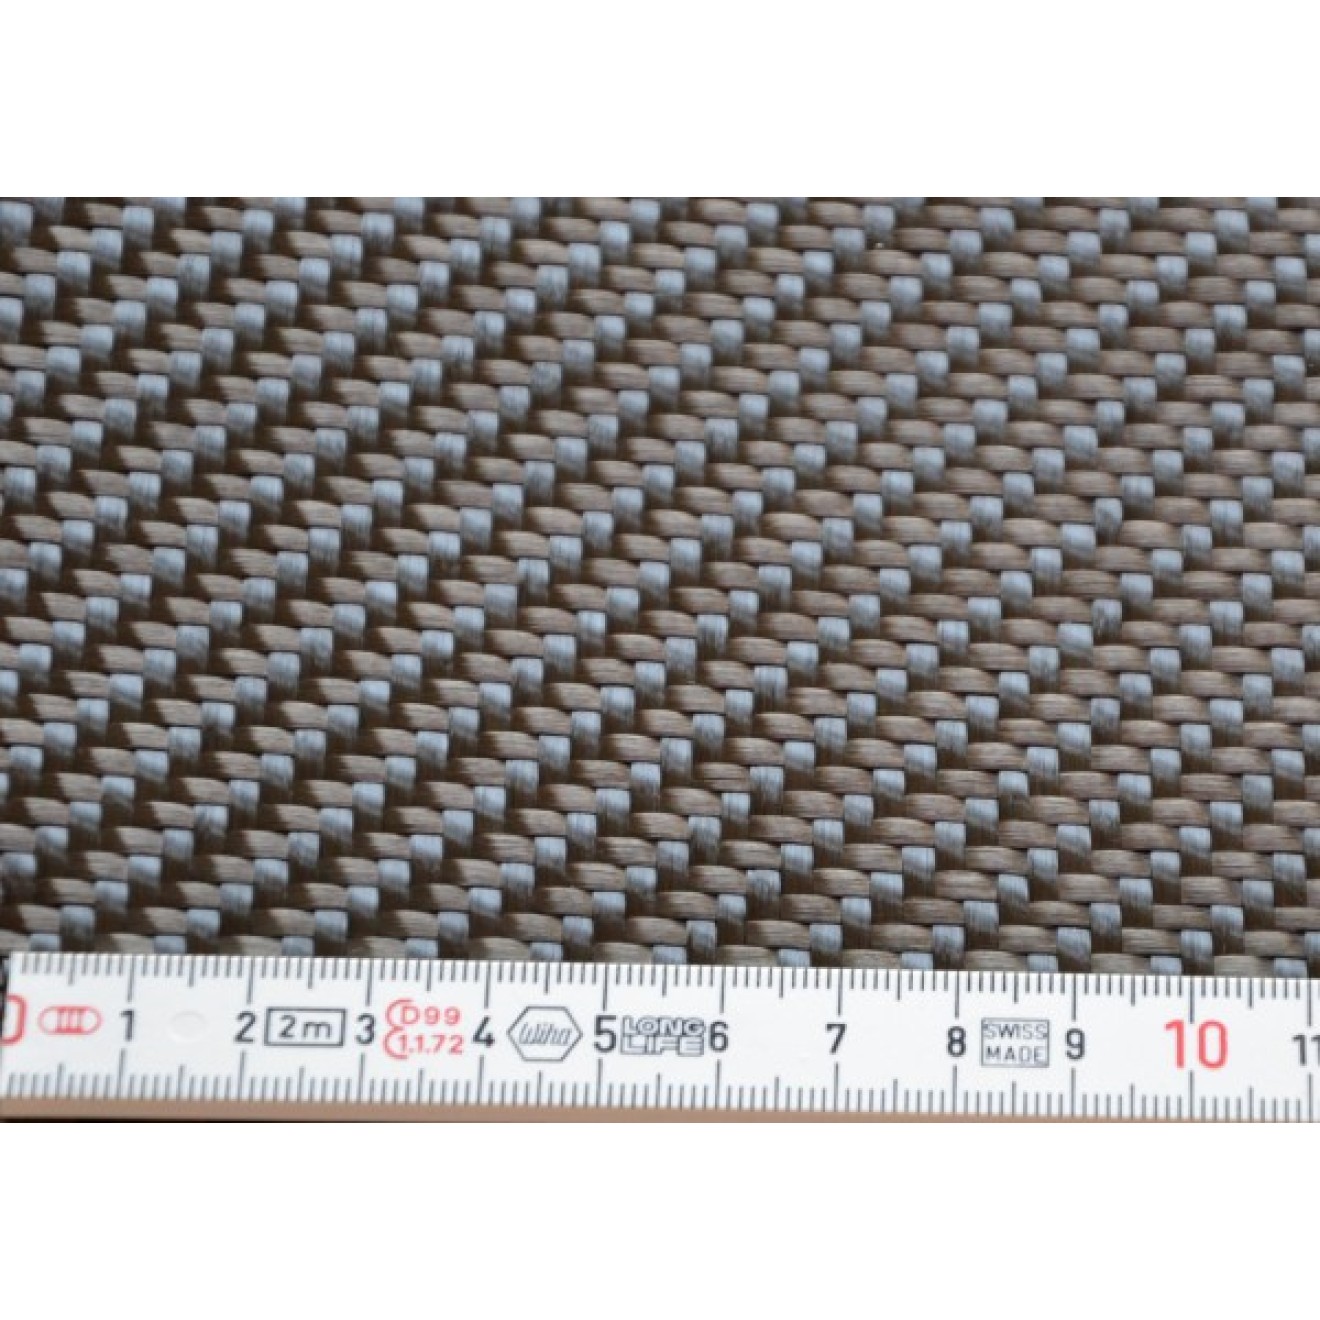 Woven carbon fiber fabric 12K 600g/m², twill, roll length 50m